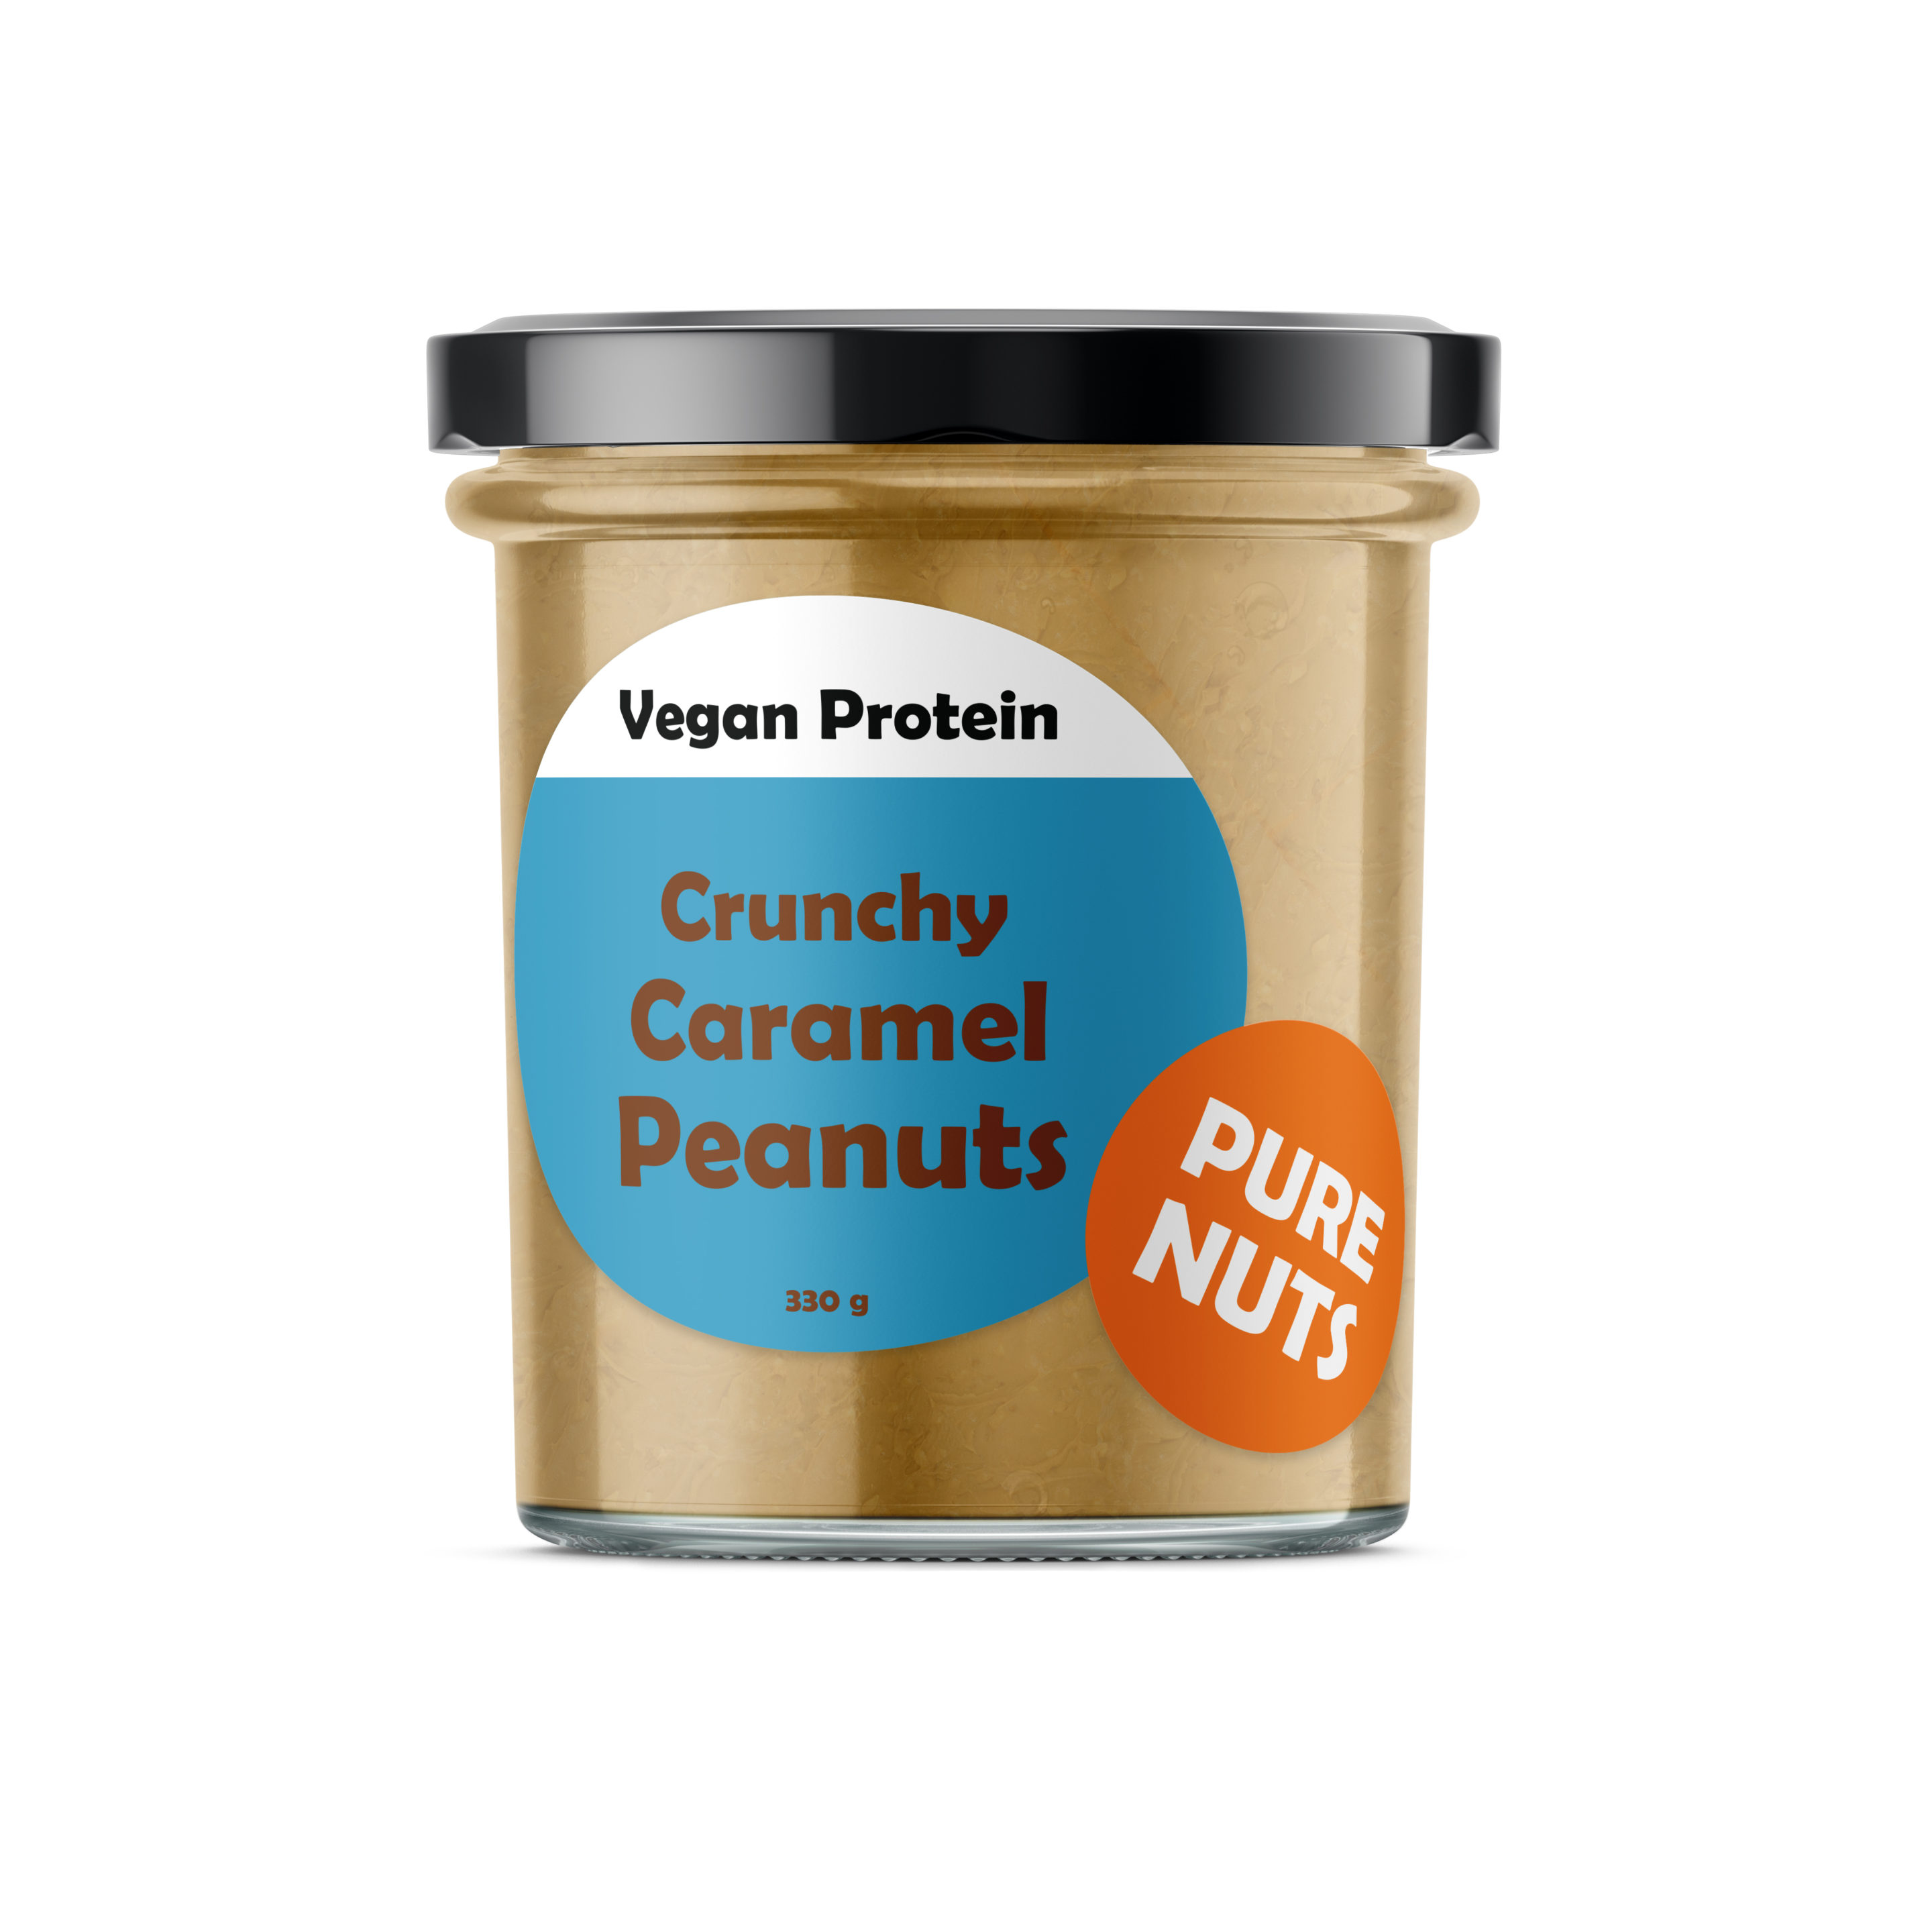 Vegan PROTEIN Crunchy Caramel Peanuts 330 g